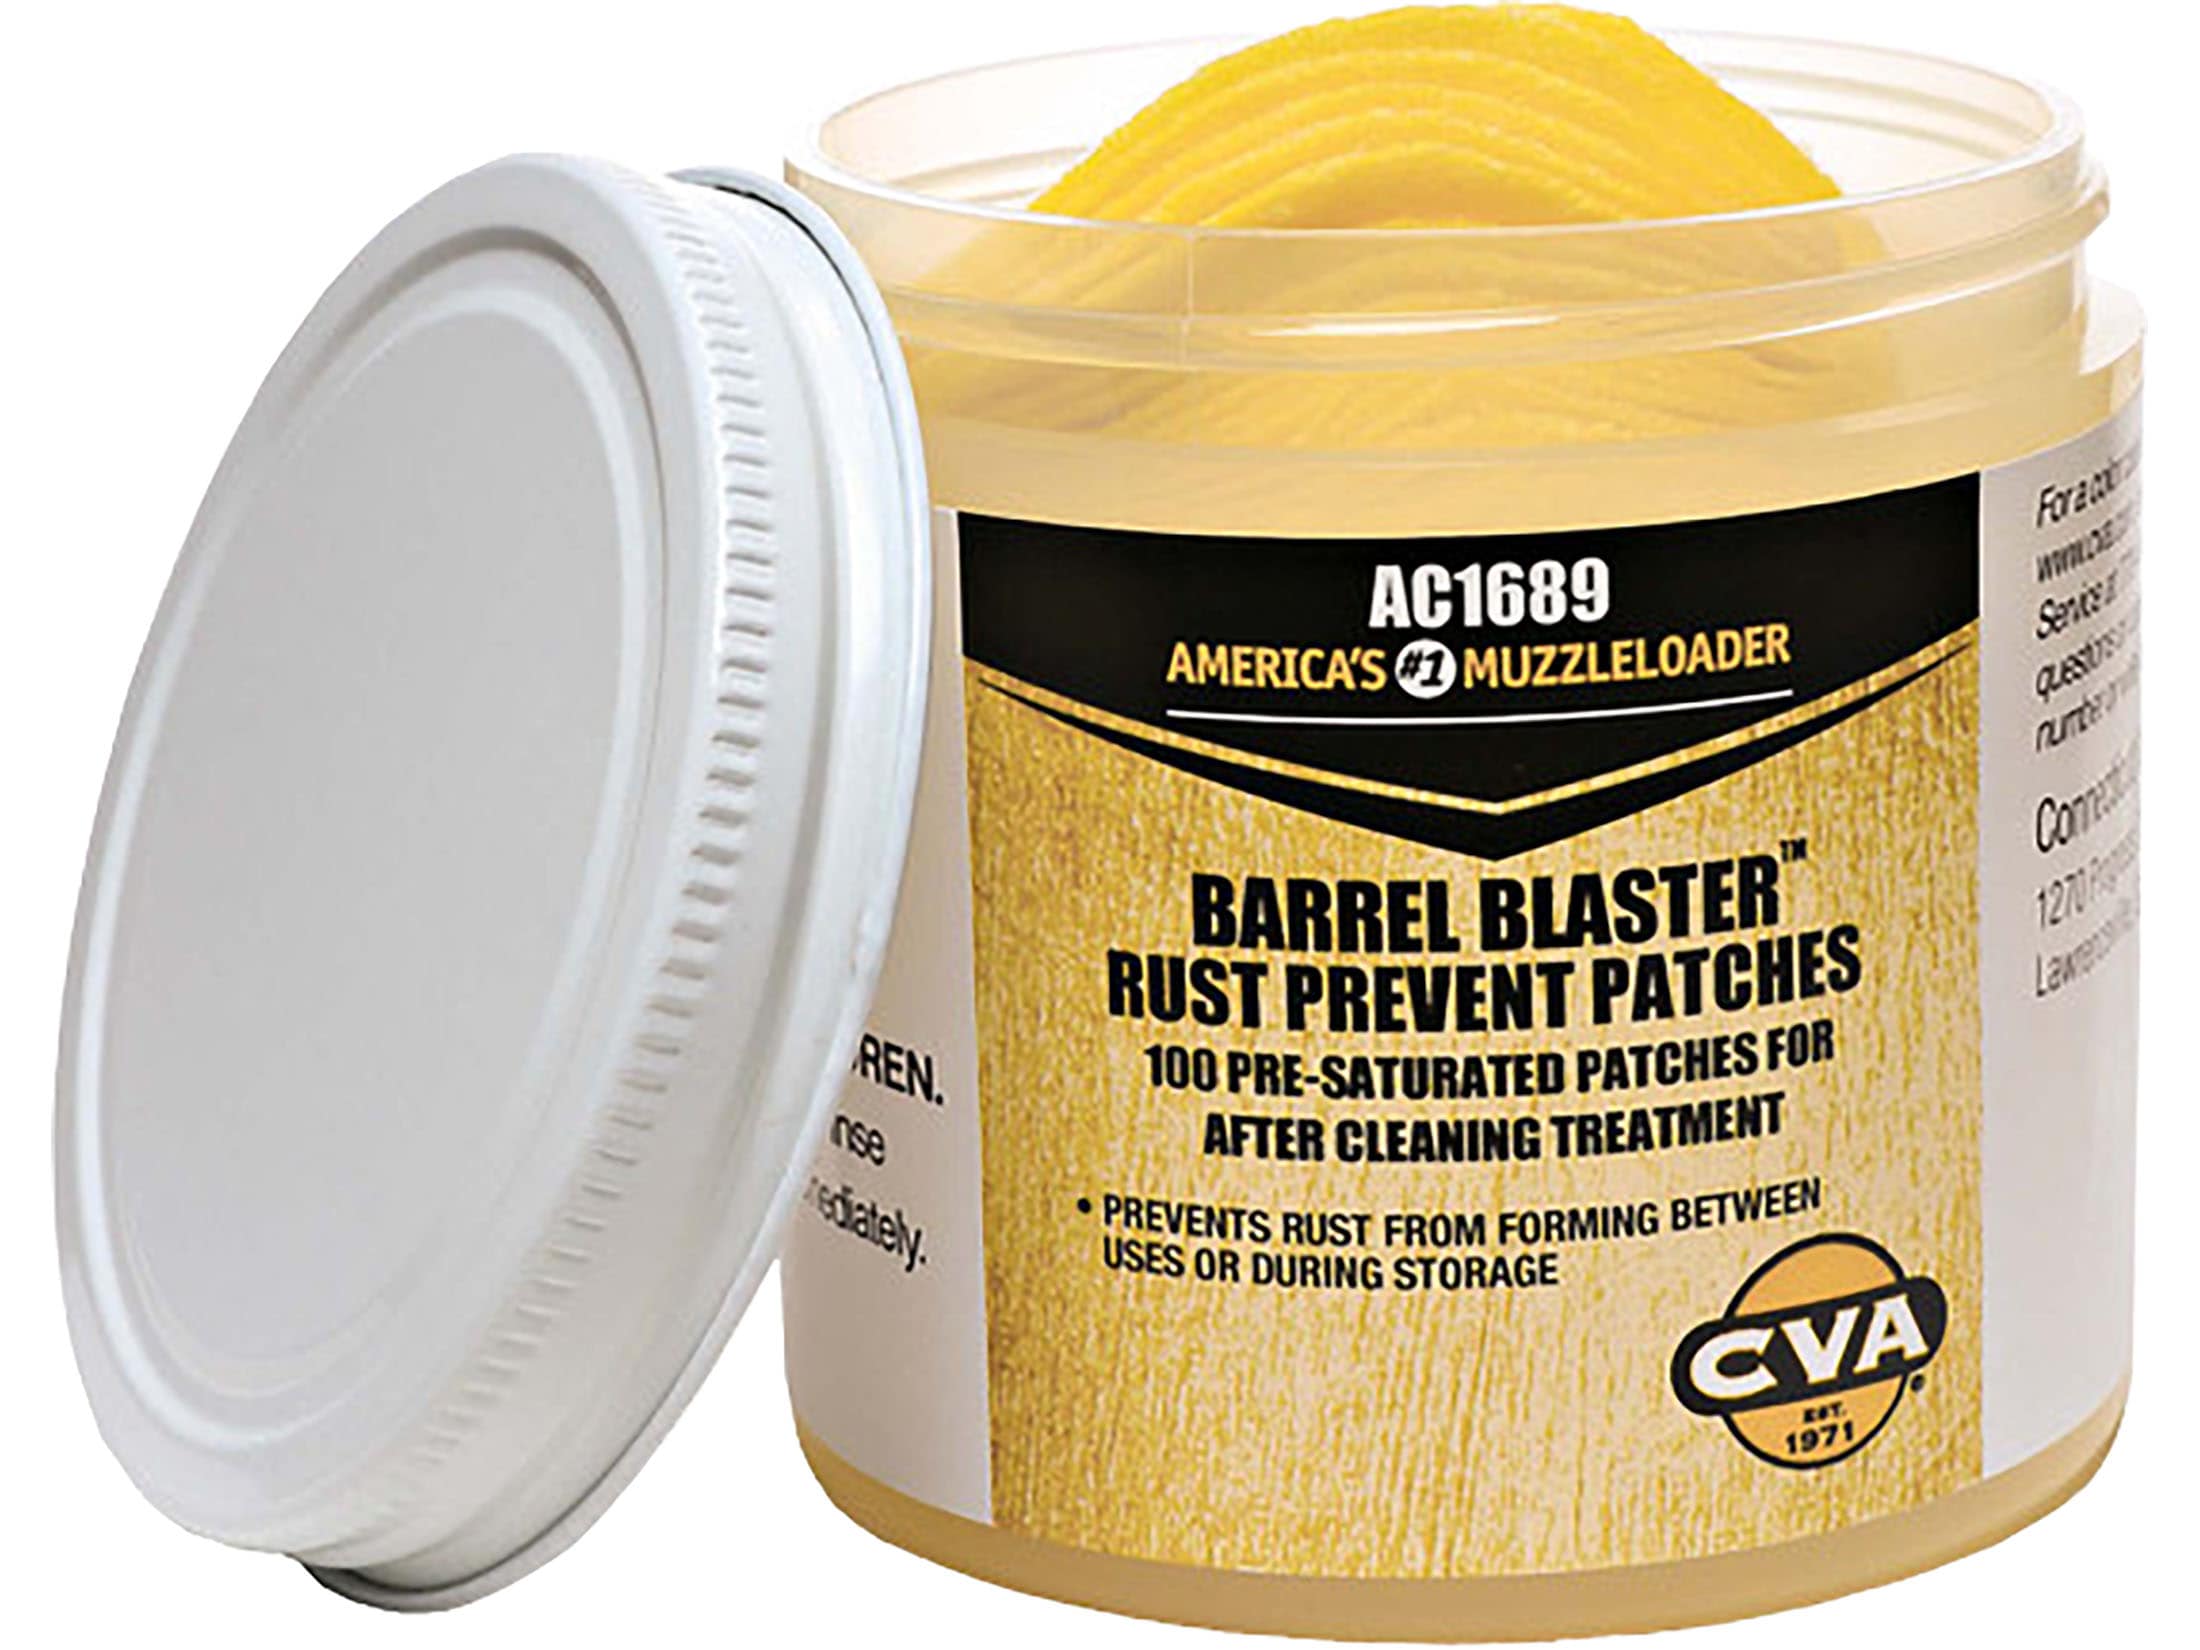 CVA Barrel Blaster Rust Preventative Black Powder Cotton Cleaning